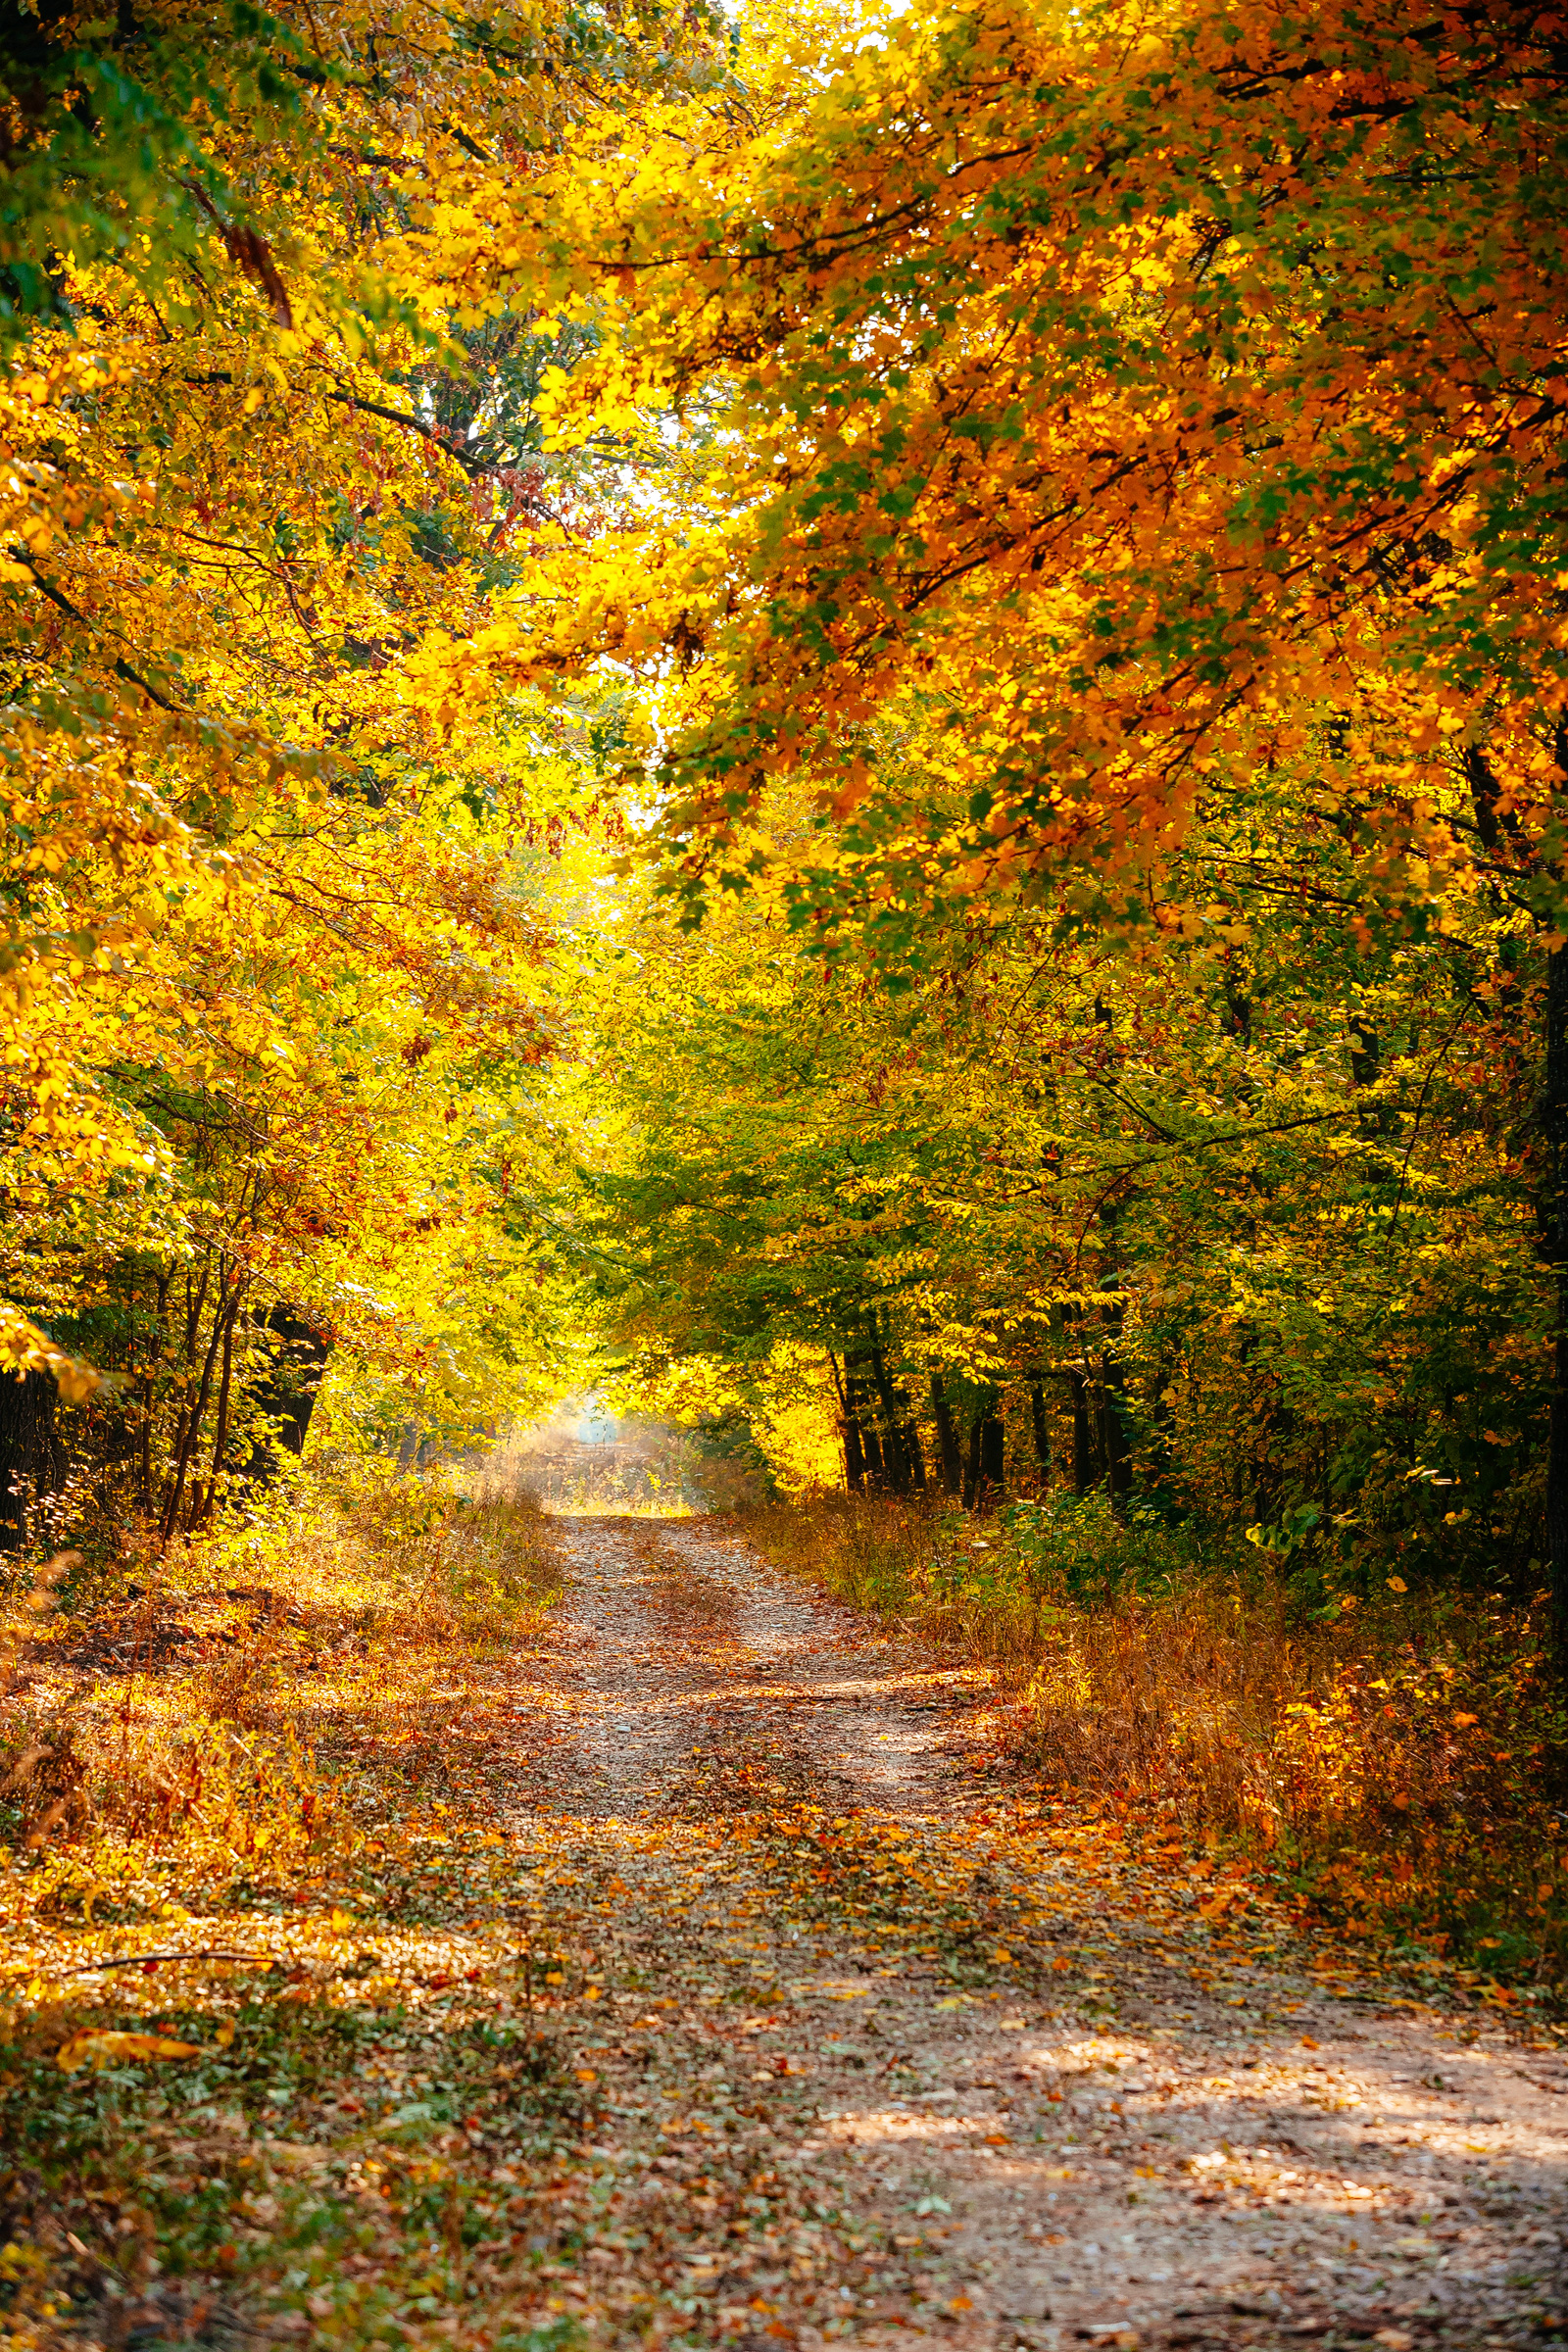 Autumn foliage along a forest road